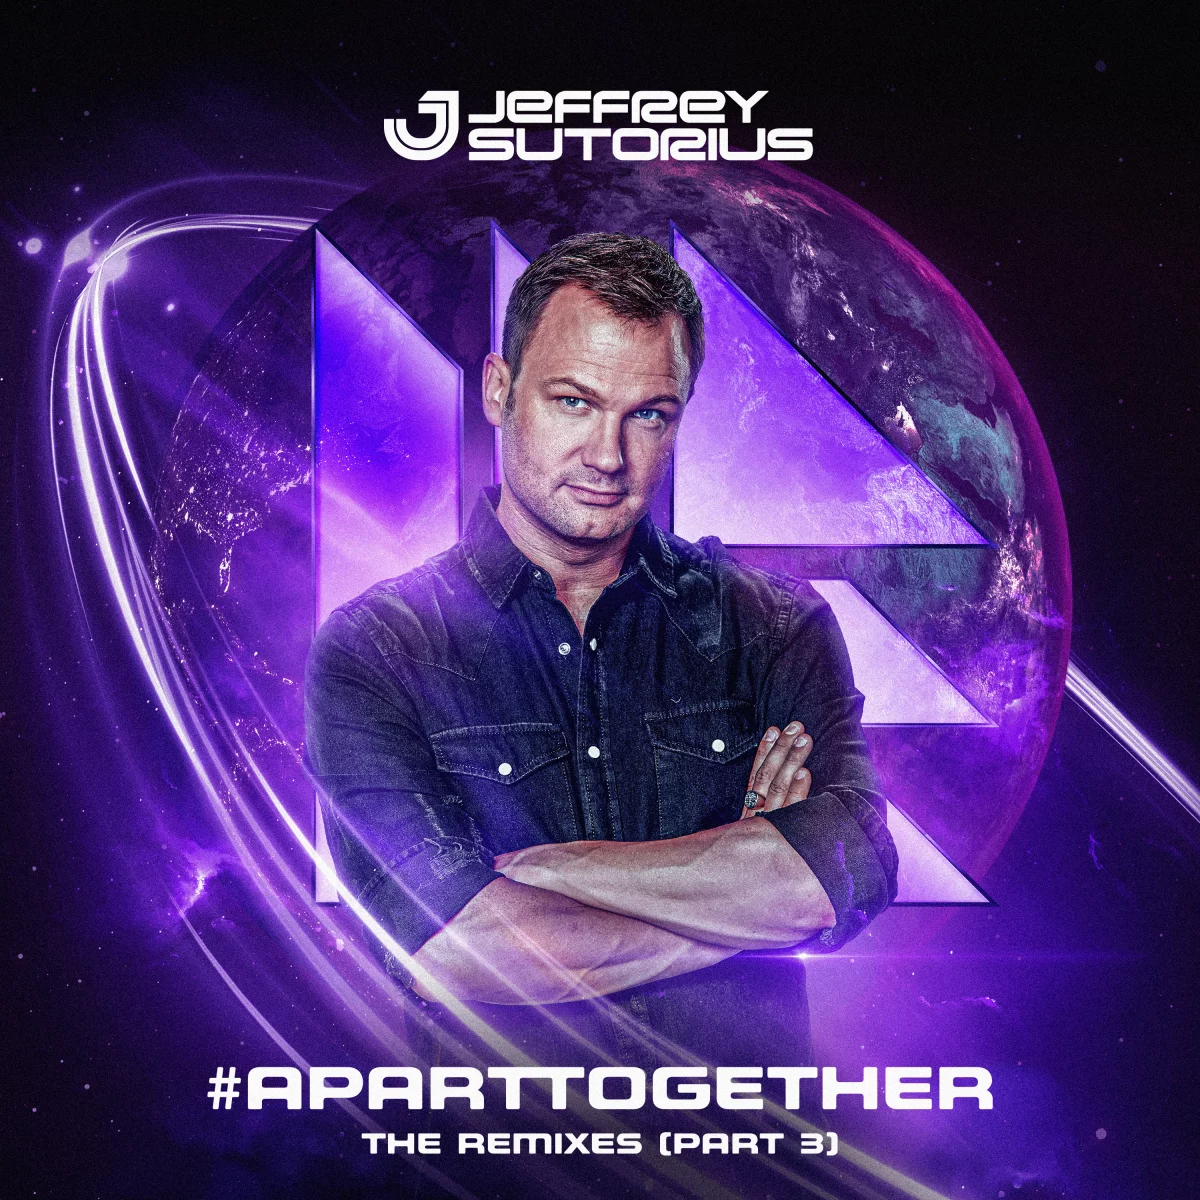 #aparttogether The Remixes (Part 3) - Jeffrey Sutorius⁠ 